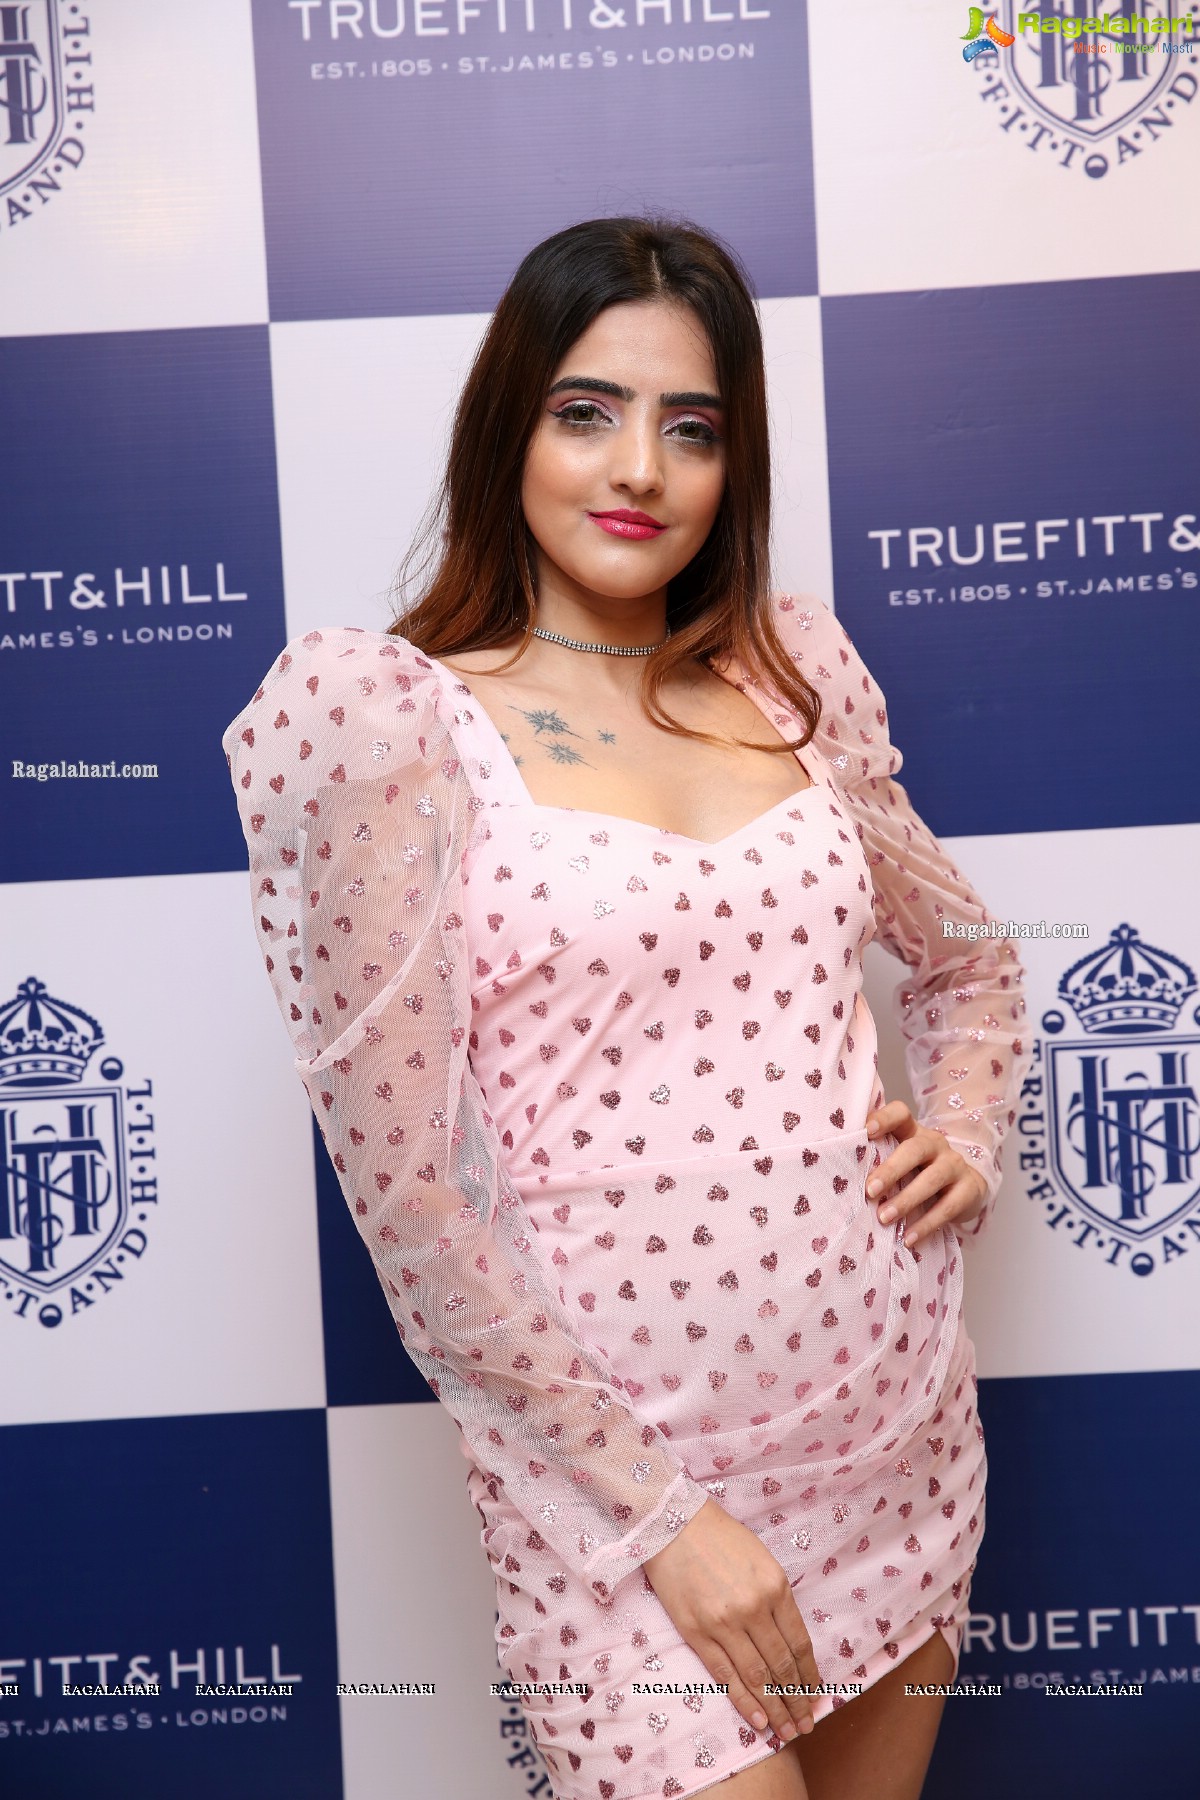 Truefitt & Hill Opens Its 2nd Outlet in Hyderabad at Gachibowli